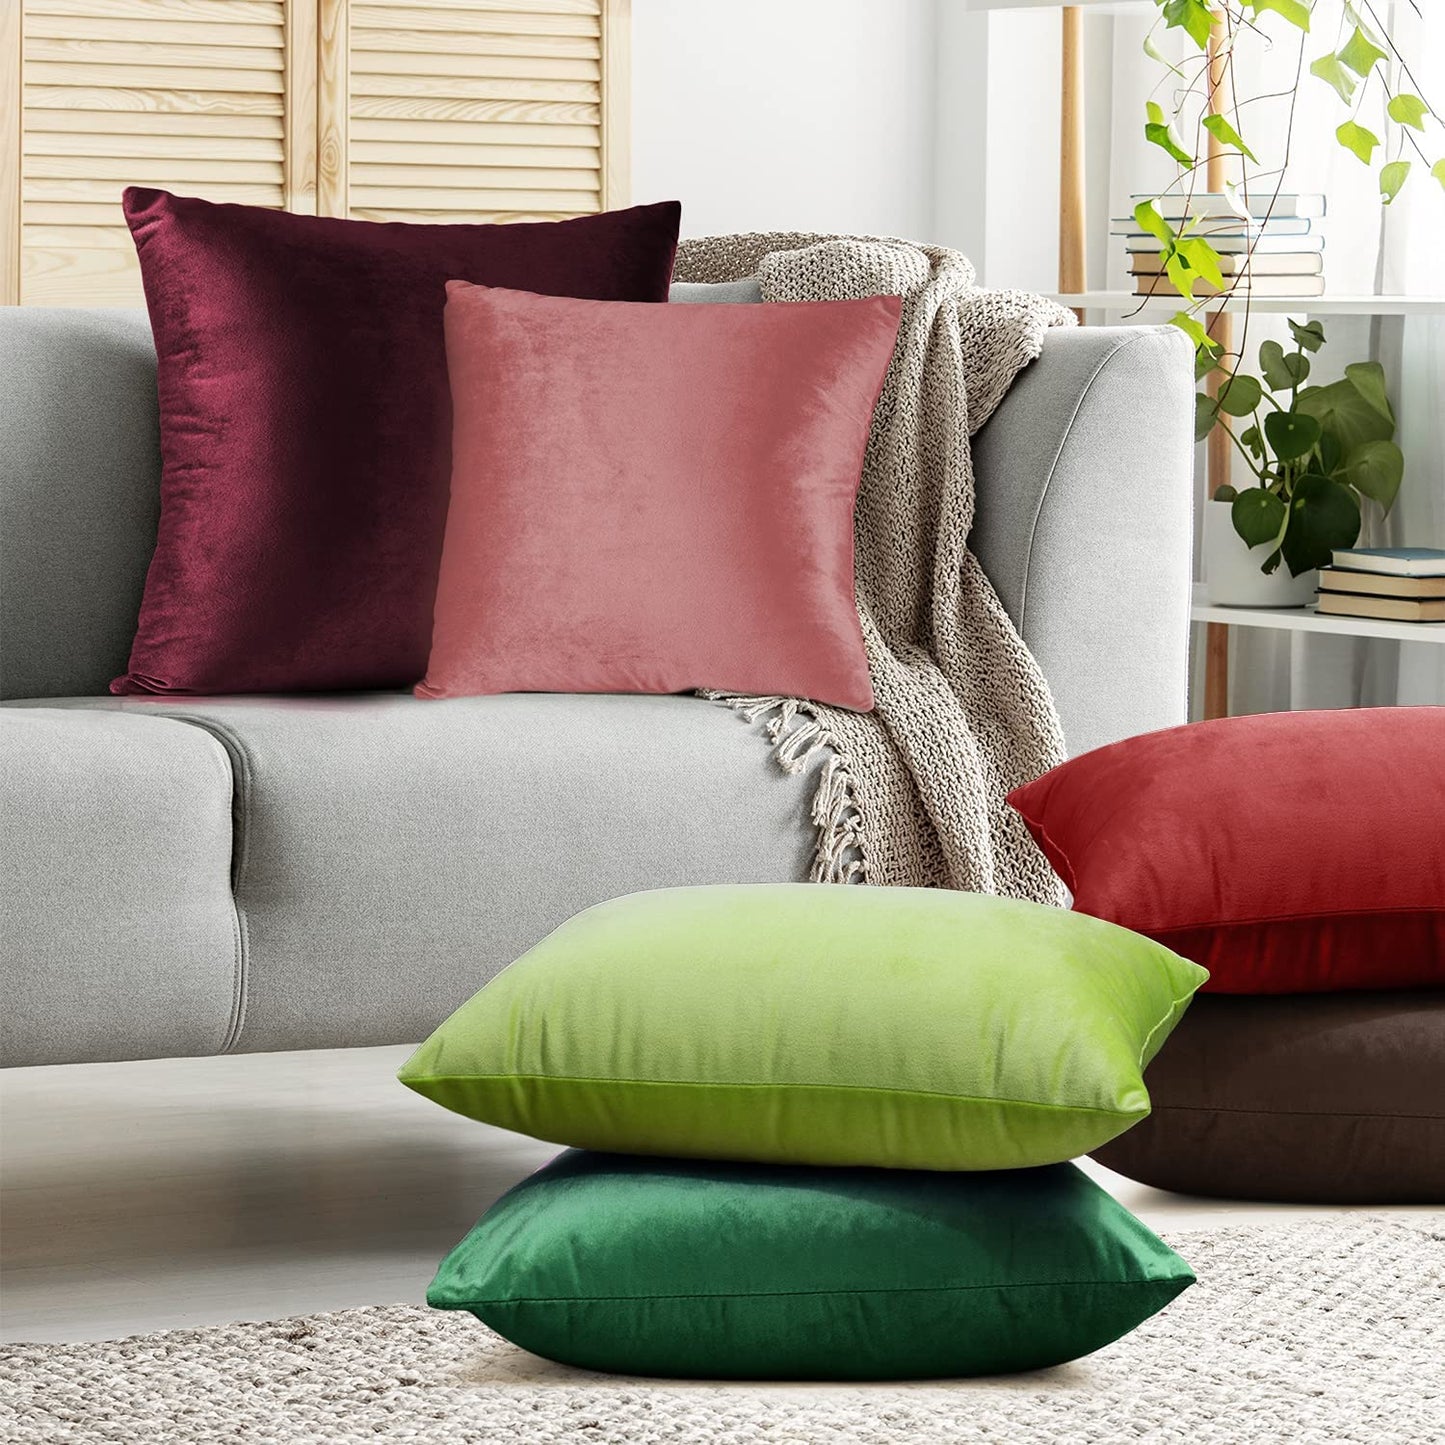 Plain Velvet Cushion 16 x 16 inches - Olive Green